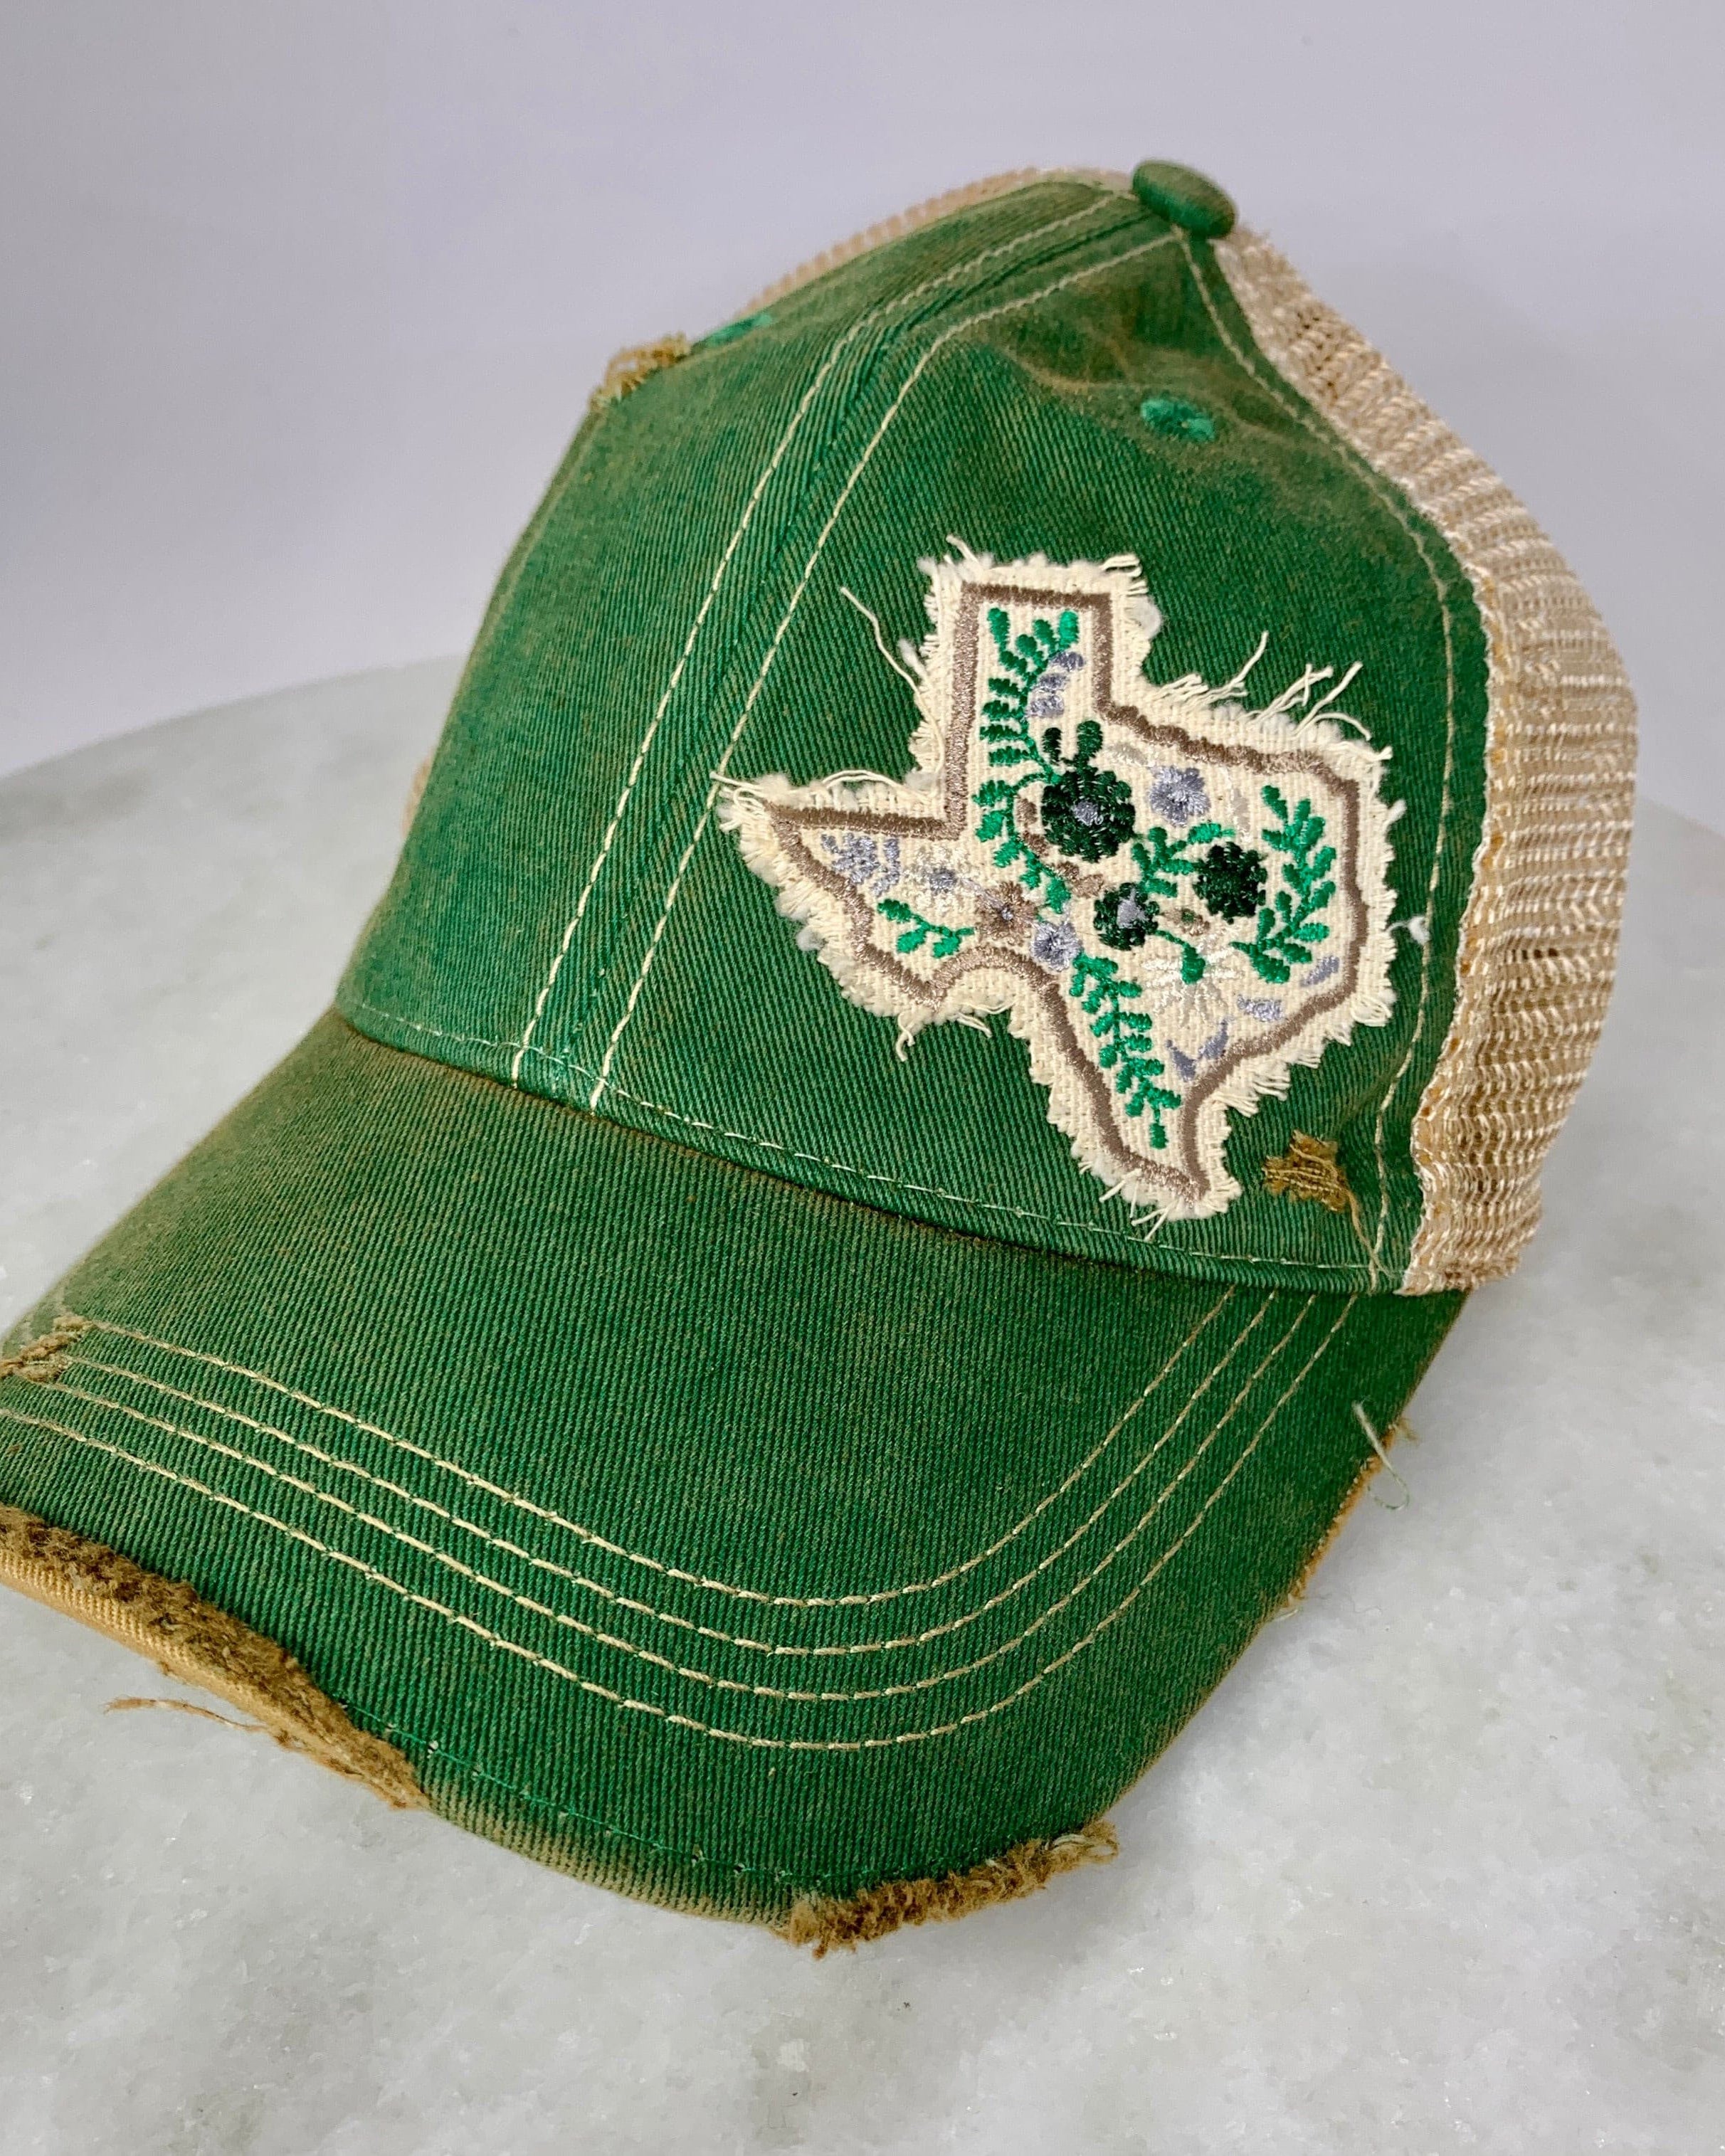 Assorted Texas Shape Patch Trucker Hats.